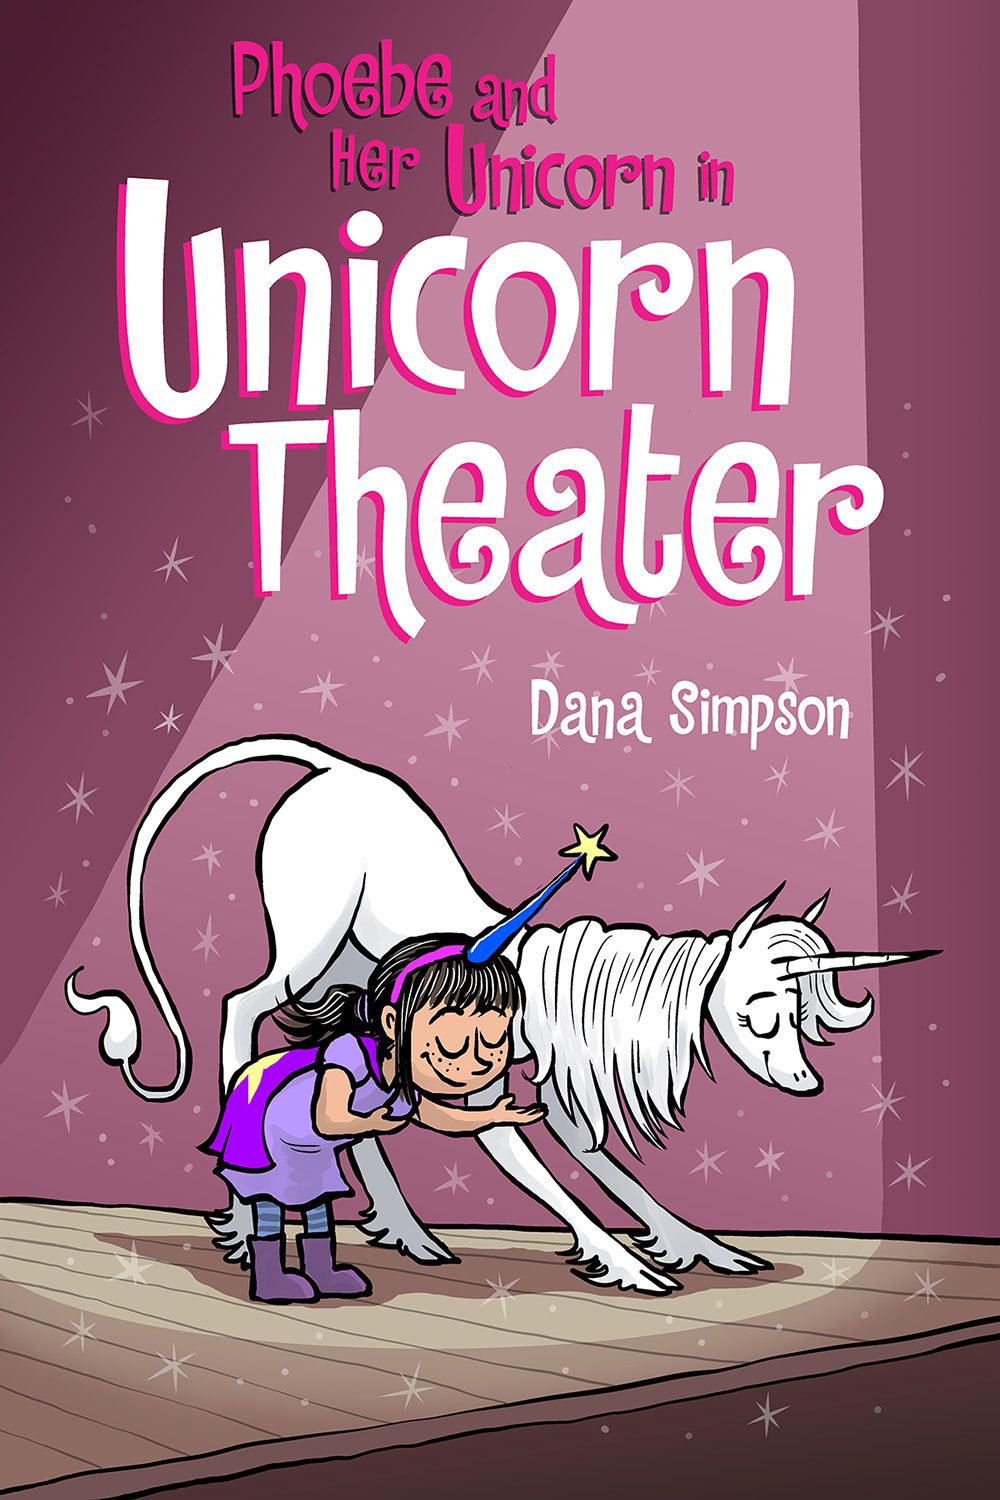 Phoebe and Her Unicorn in Unicorn Theater (Phoebe and Her Unicorn #8)